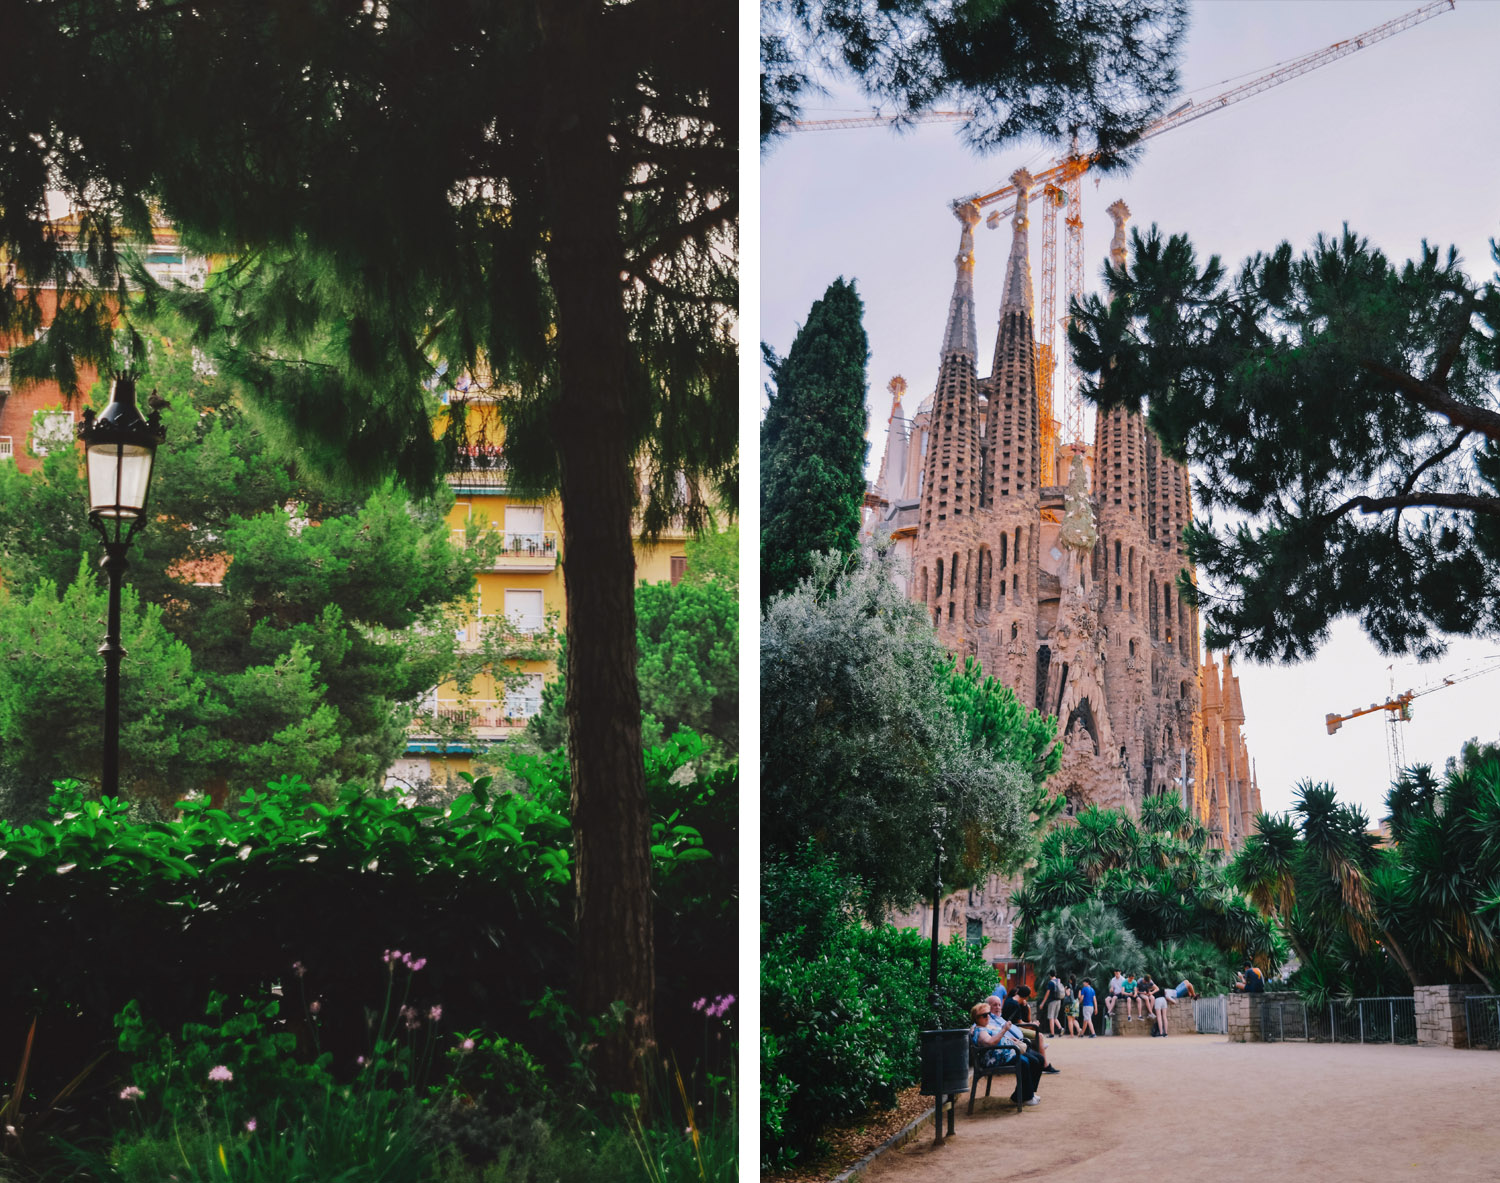 La Sagrada Familia i Barcelona